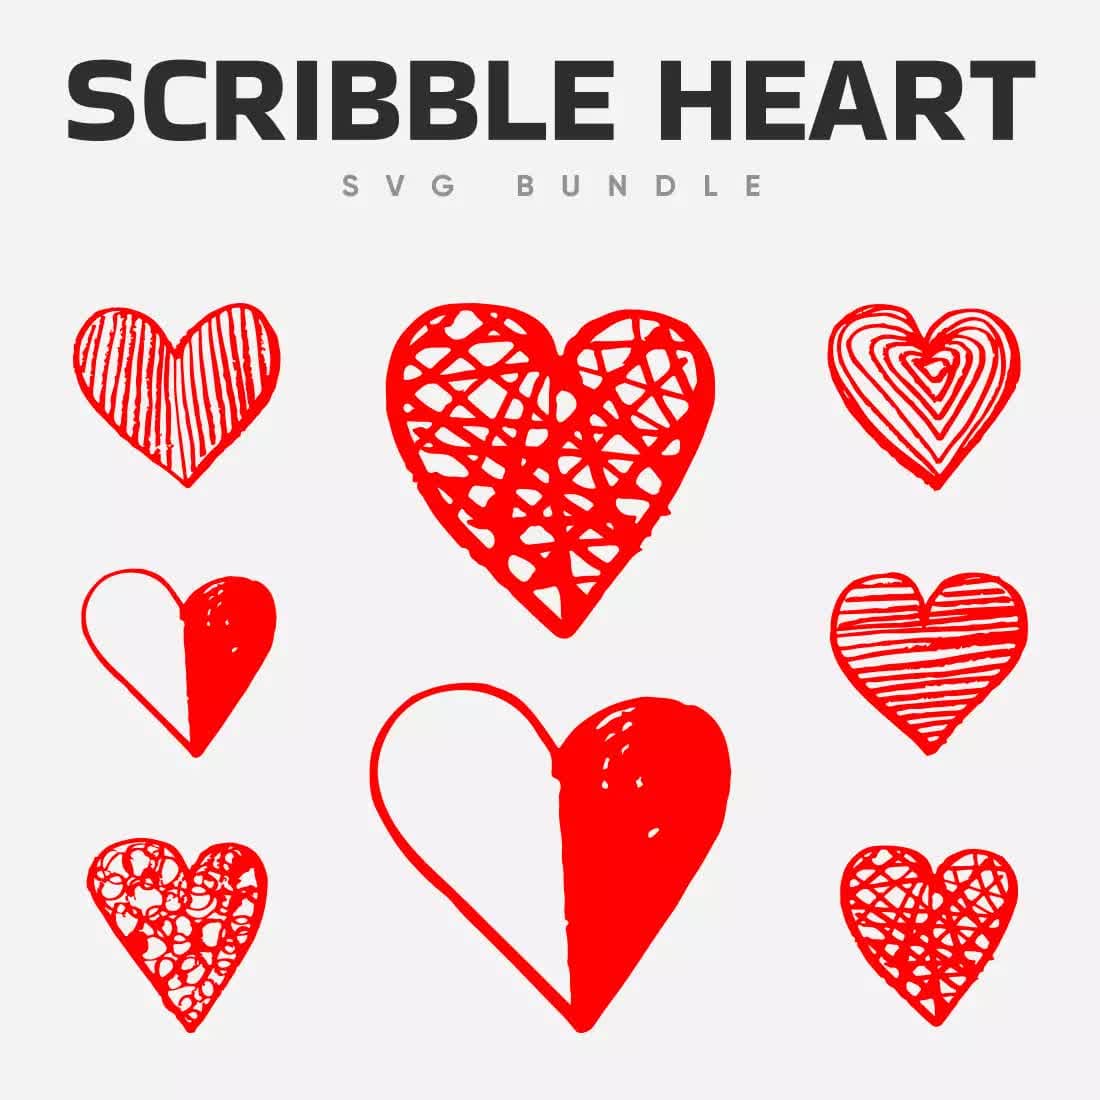 Scribble Heart SVG Bundle Preview 3.